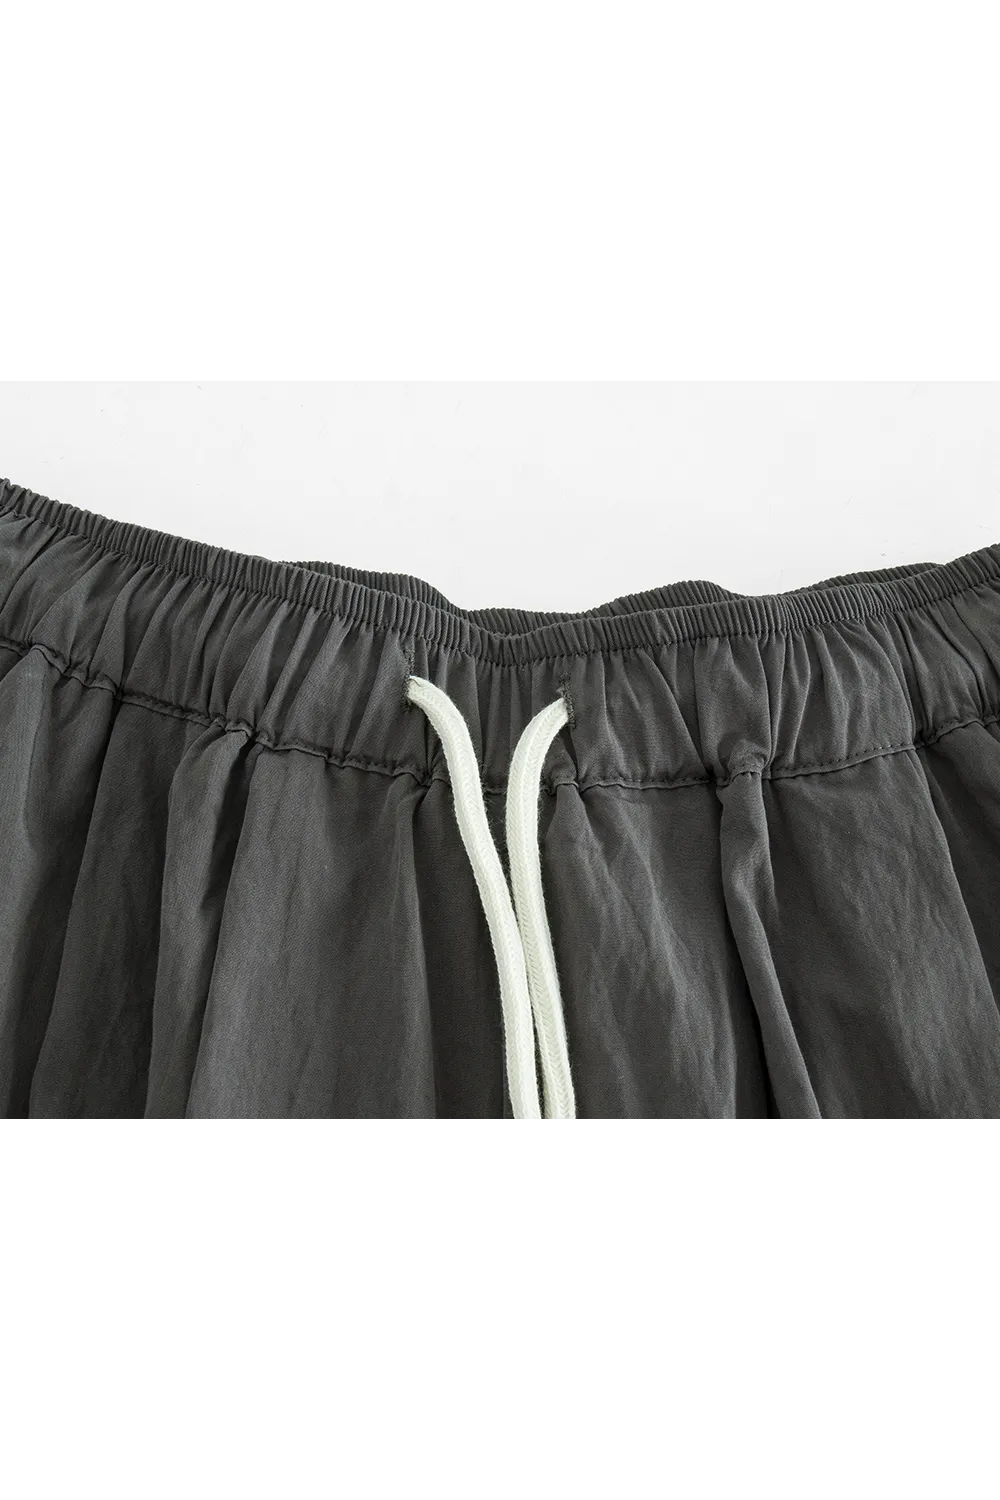 Women's Casual Loose-Fit Drawstring Pants